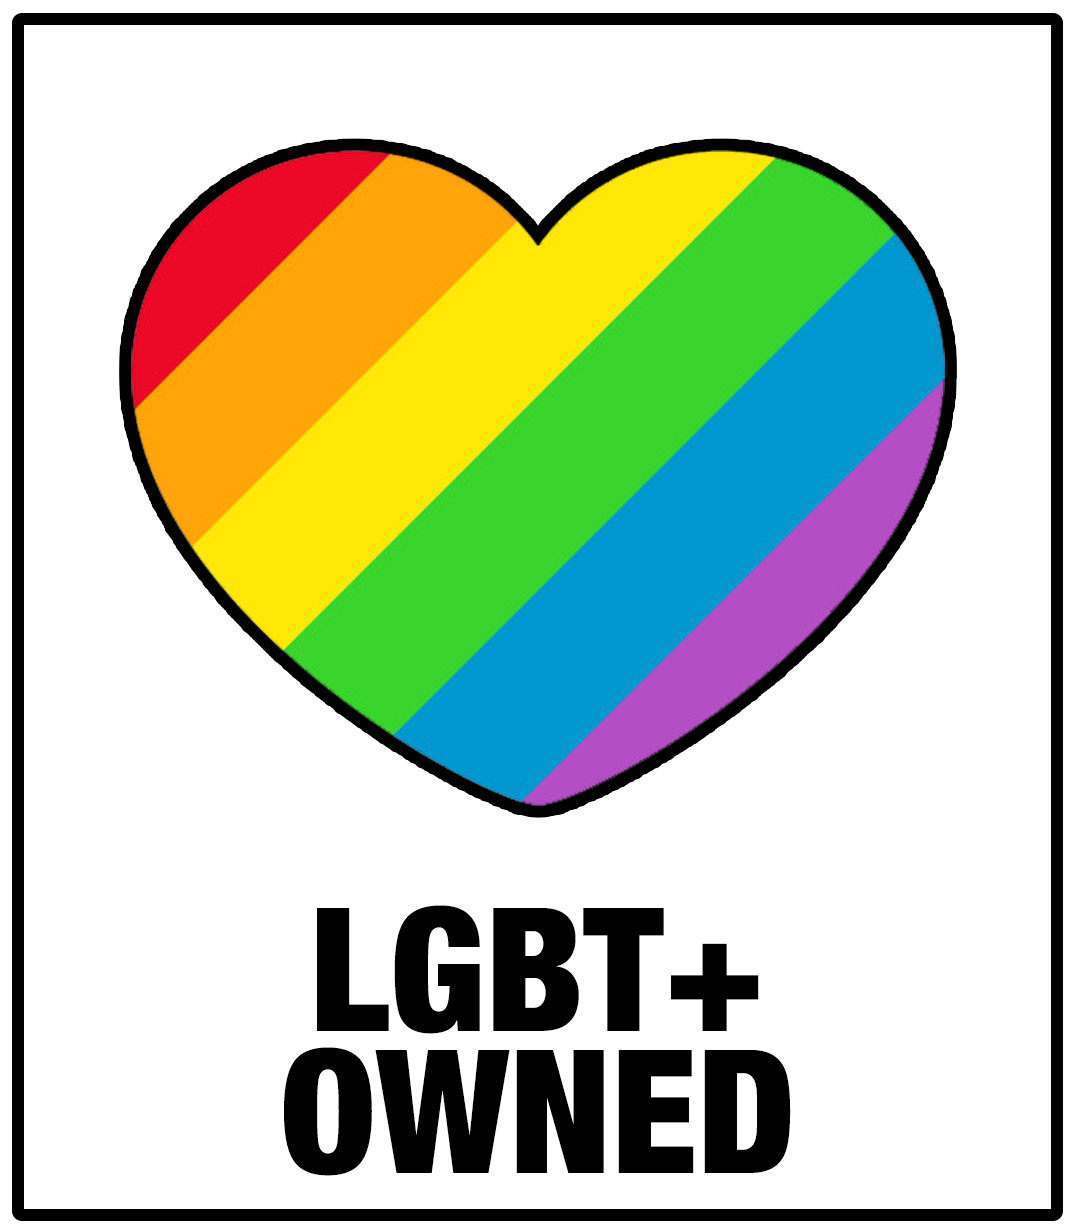 LGBTQIA+ owned business